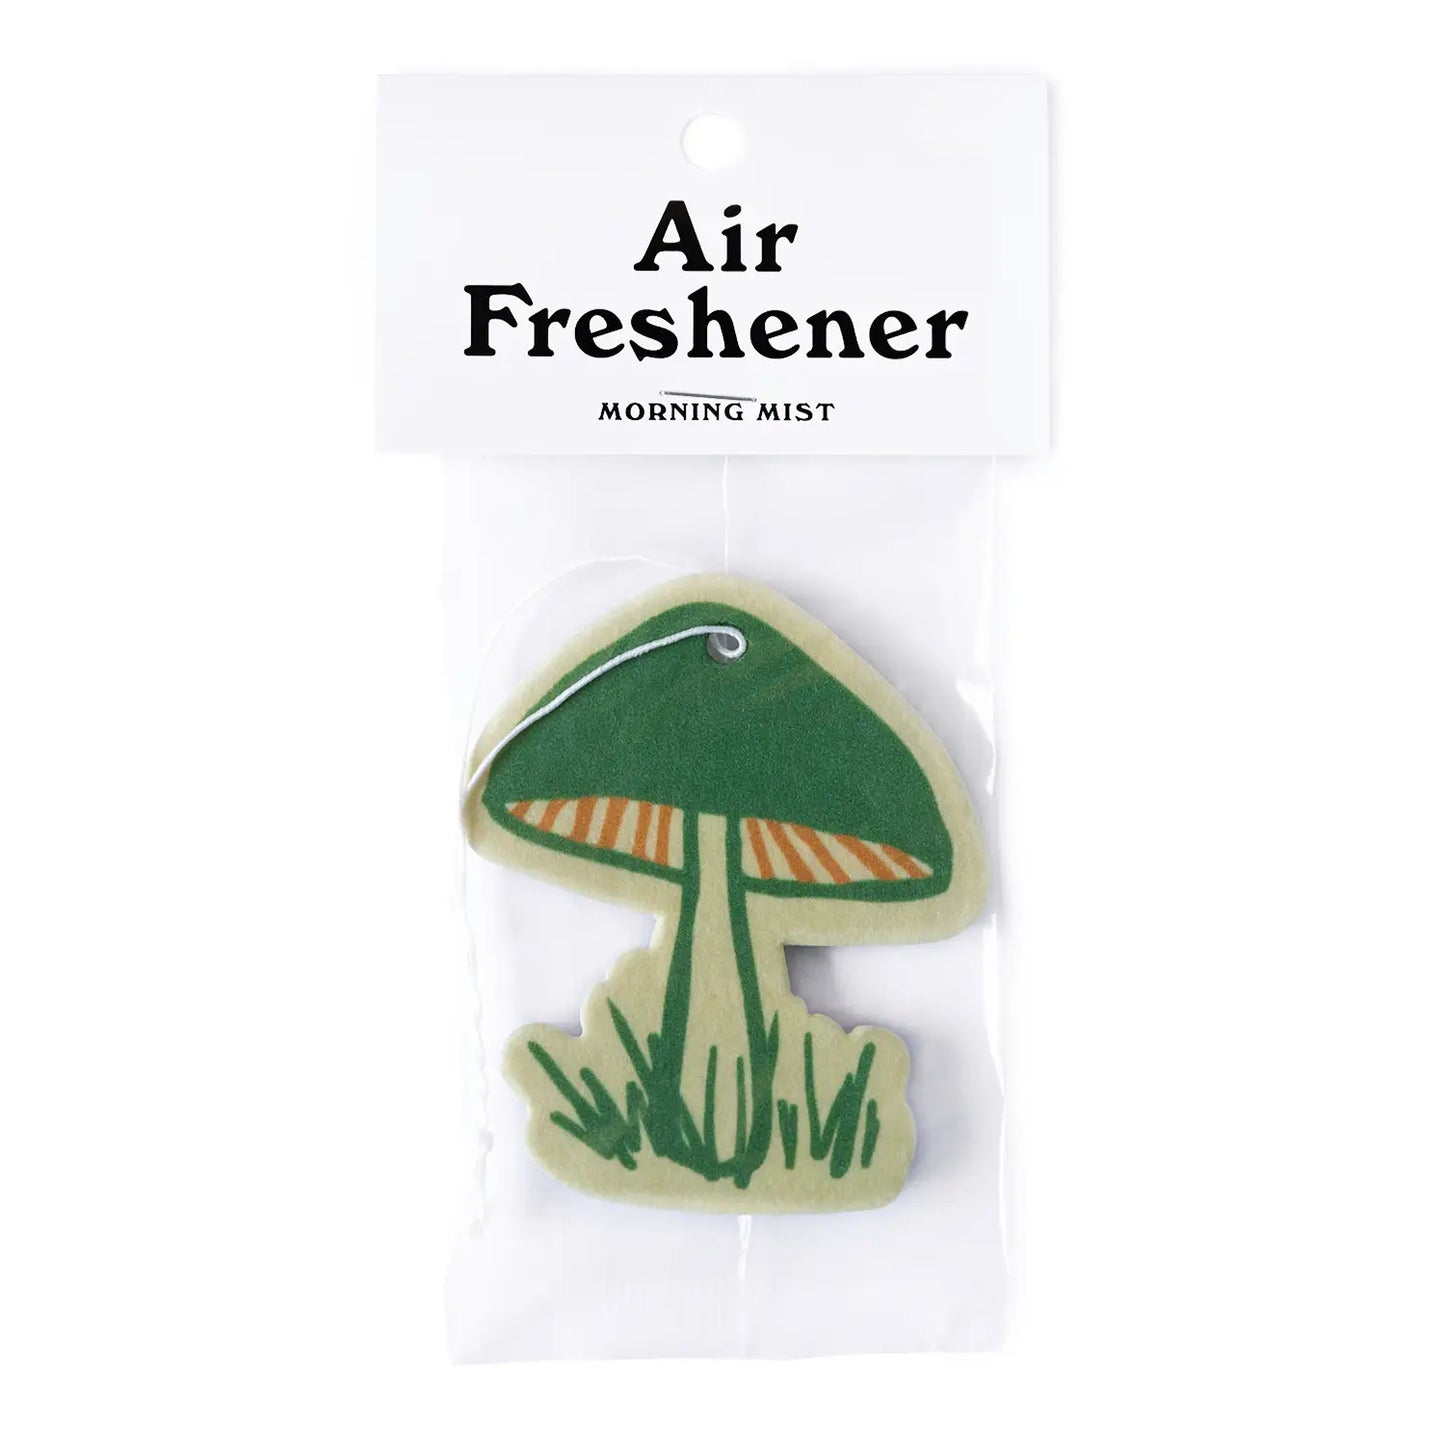 Mushroom Morning Mist Air Freshener